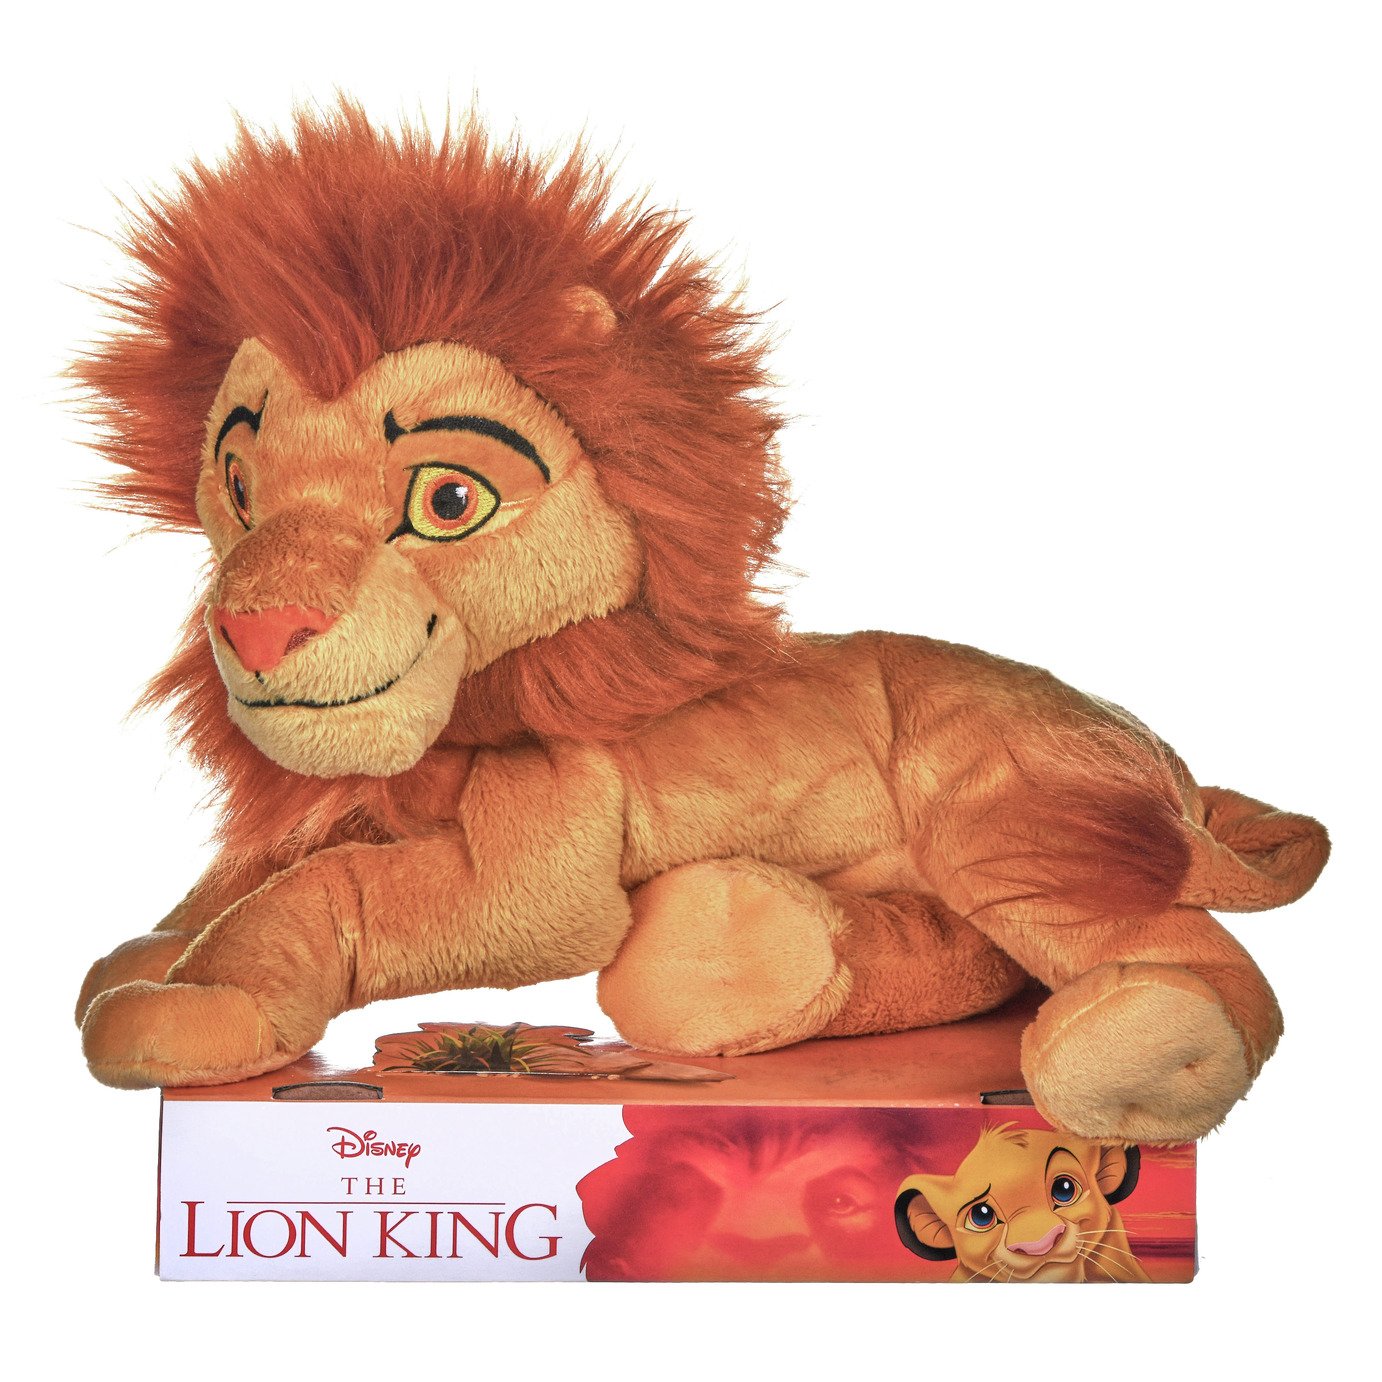 lion king soft toys uk